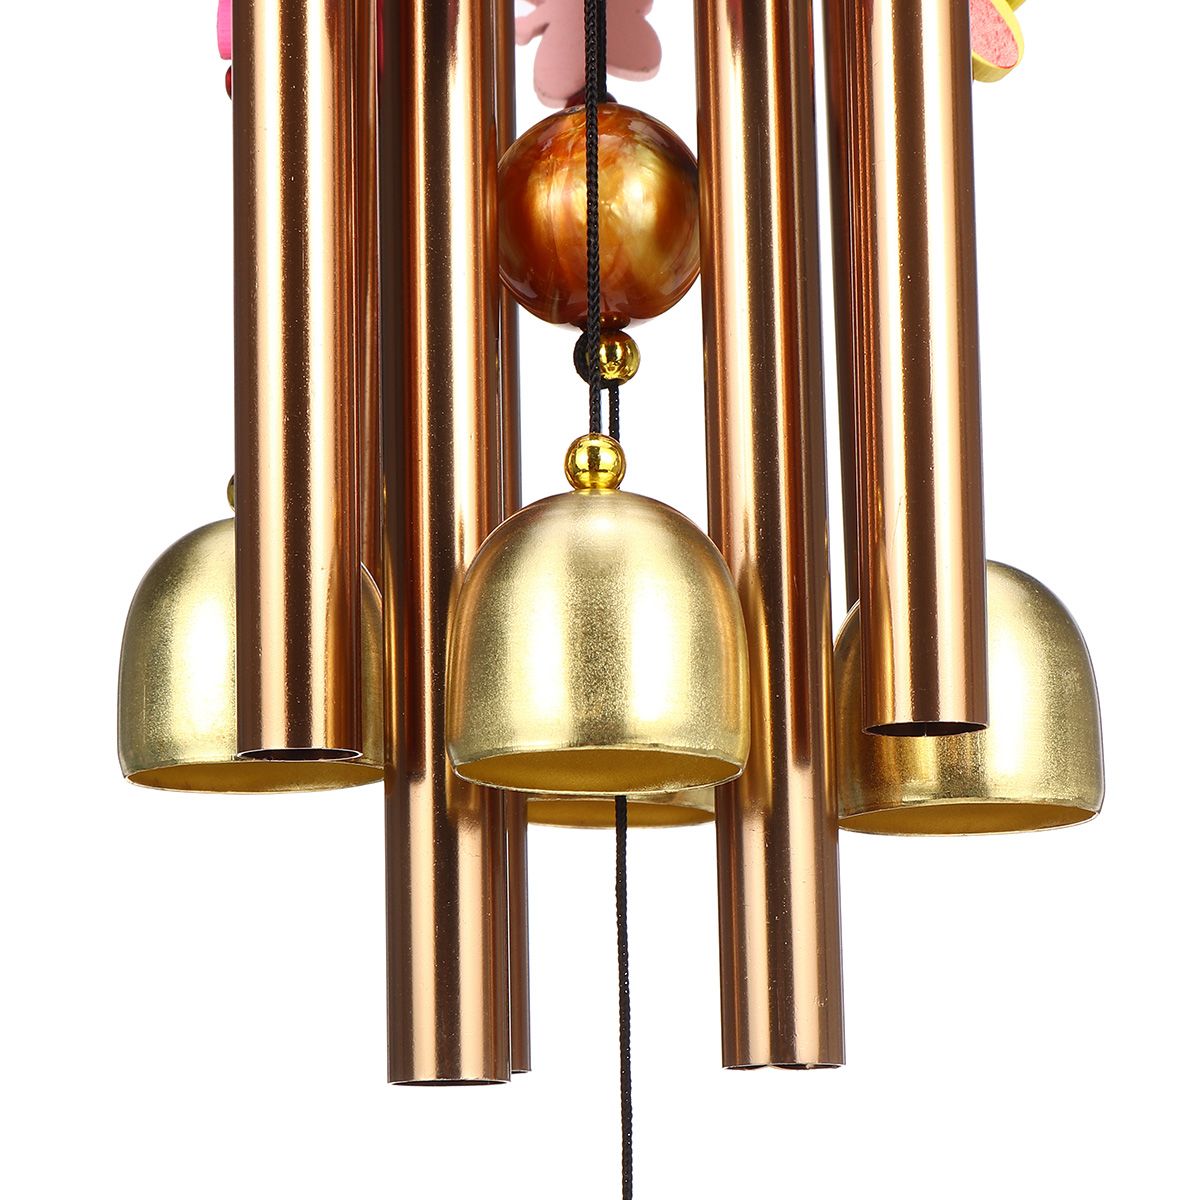 Metal-Eight-Tube-4-Bell-Wooden-Wind-Chime-Wooden-Home-Garden-Handicraft-Ornaments-1721043